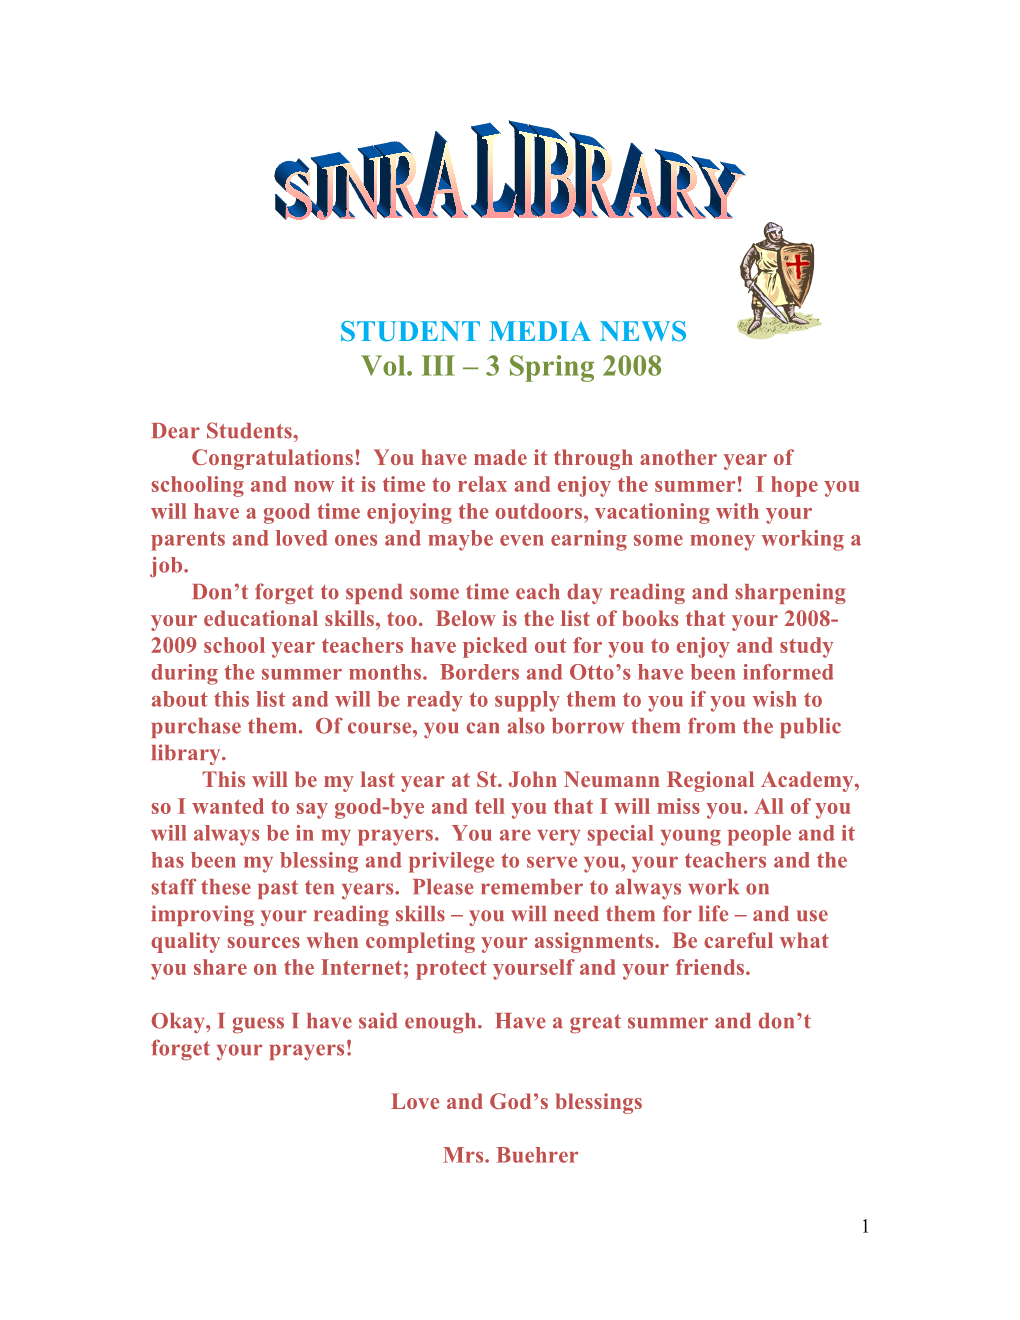 STUDENT MEDIA NEWS Vol. III – 3 Spring 2008